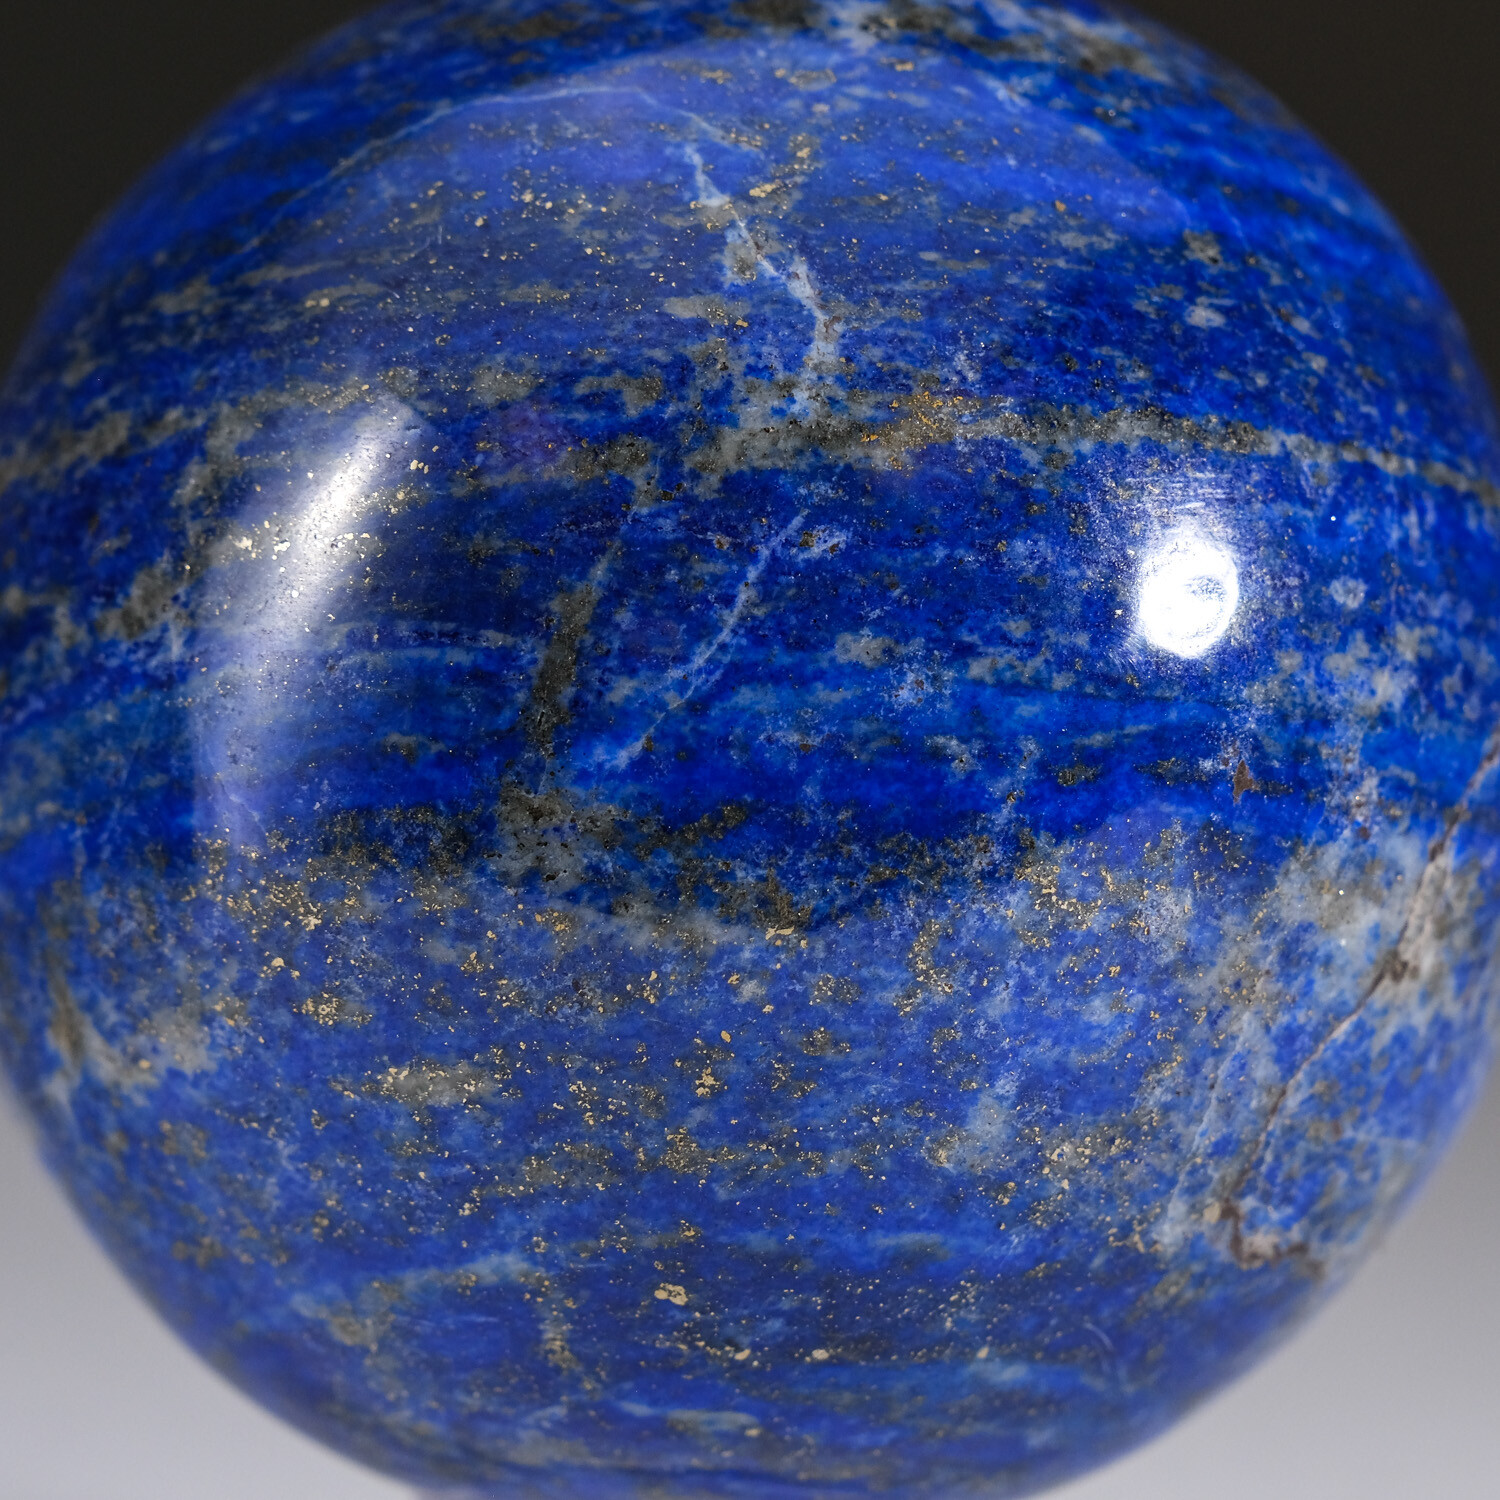 Genuine Polished Lapis Lazuli Sphere Acrylic Display Stand V1